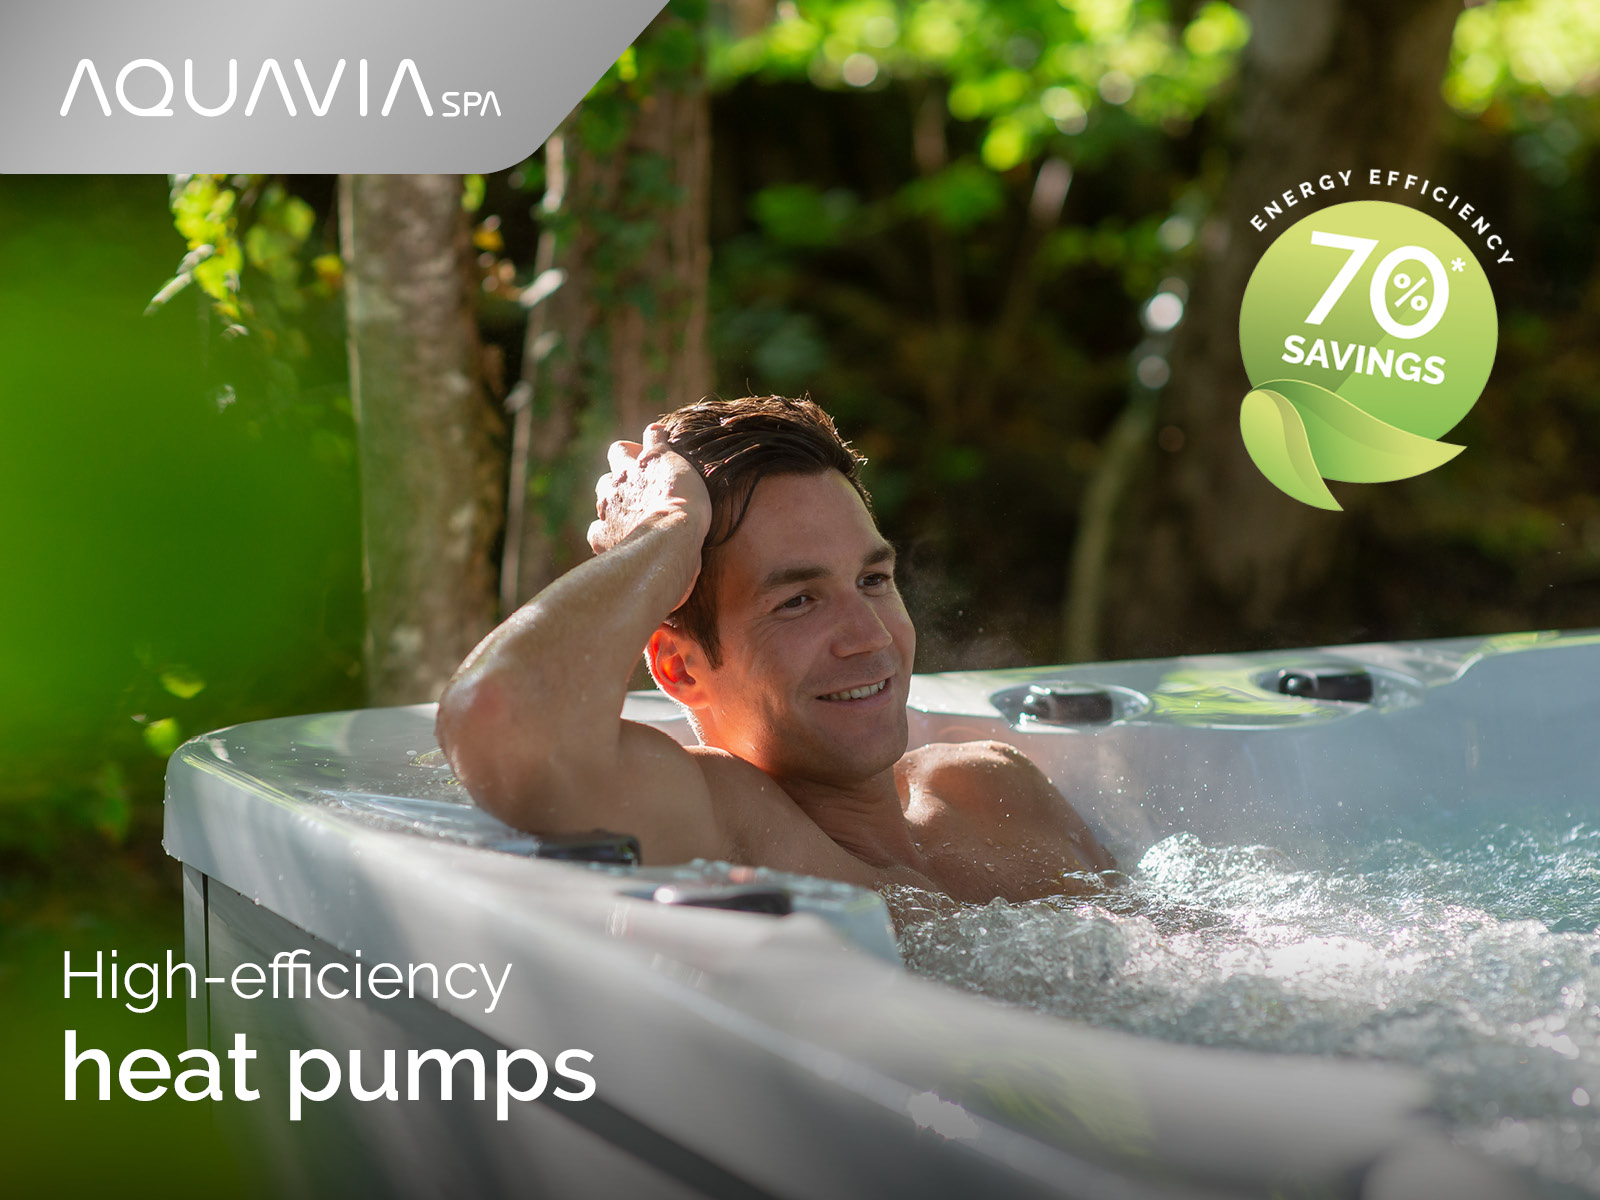 Quantum hot tub, indoor or outdoor 4-person jacuzzi - Aquavia Spa UK